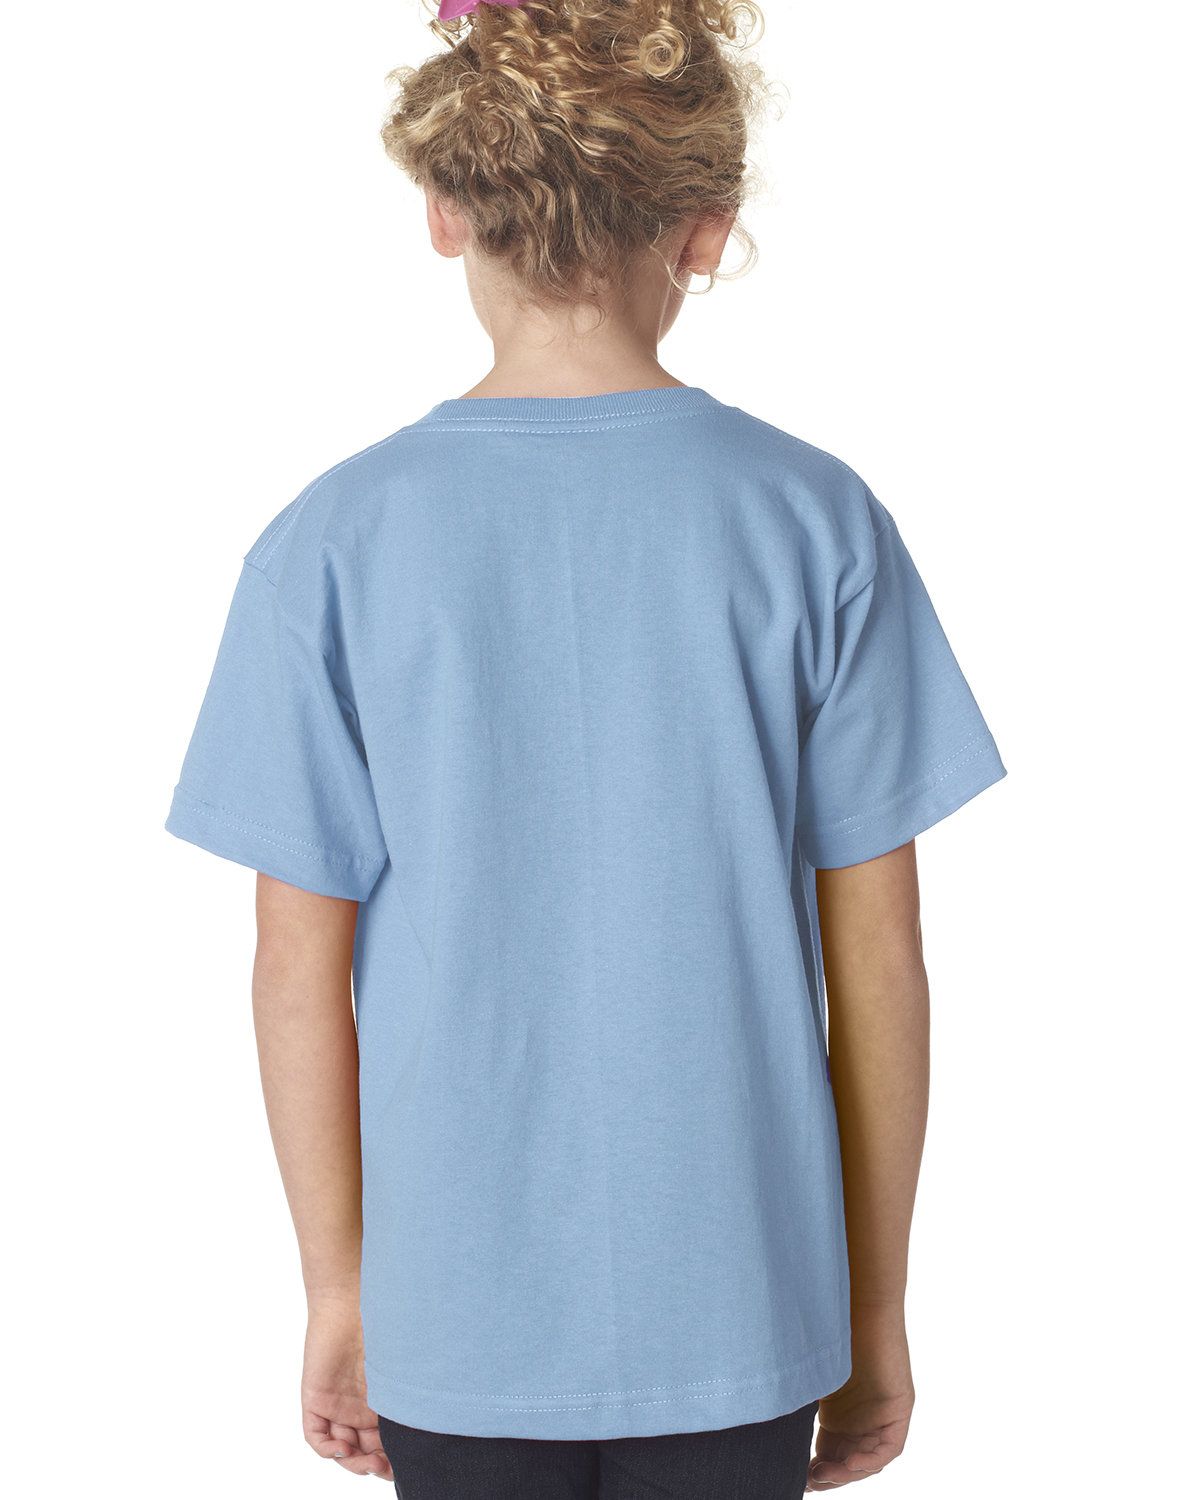 'Bayside BA4100 Youth Cotton T-Shirt'